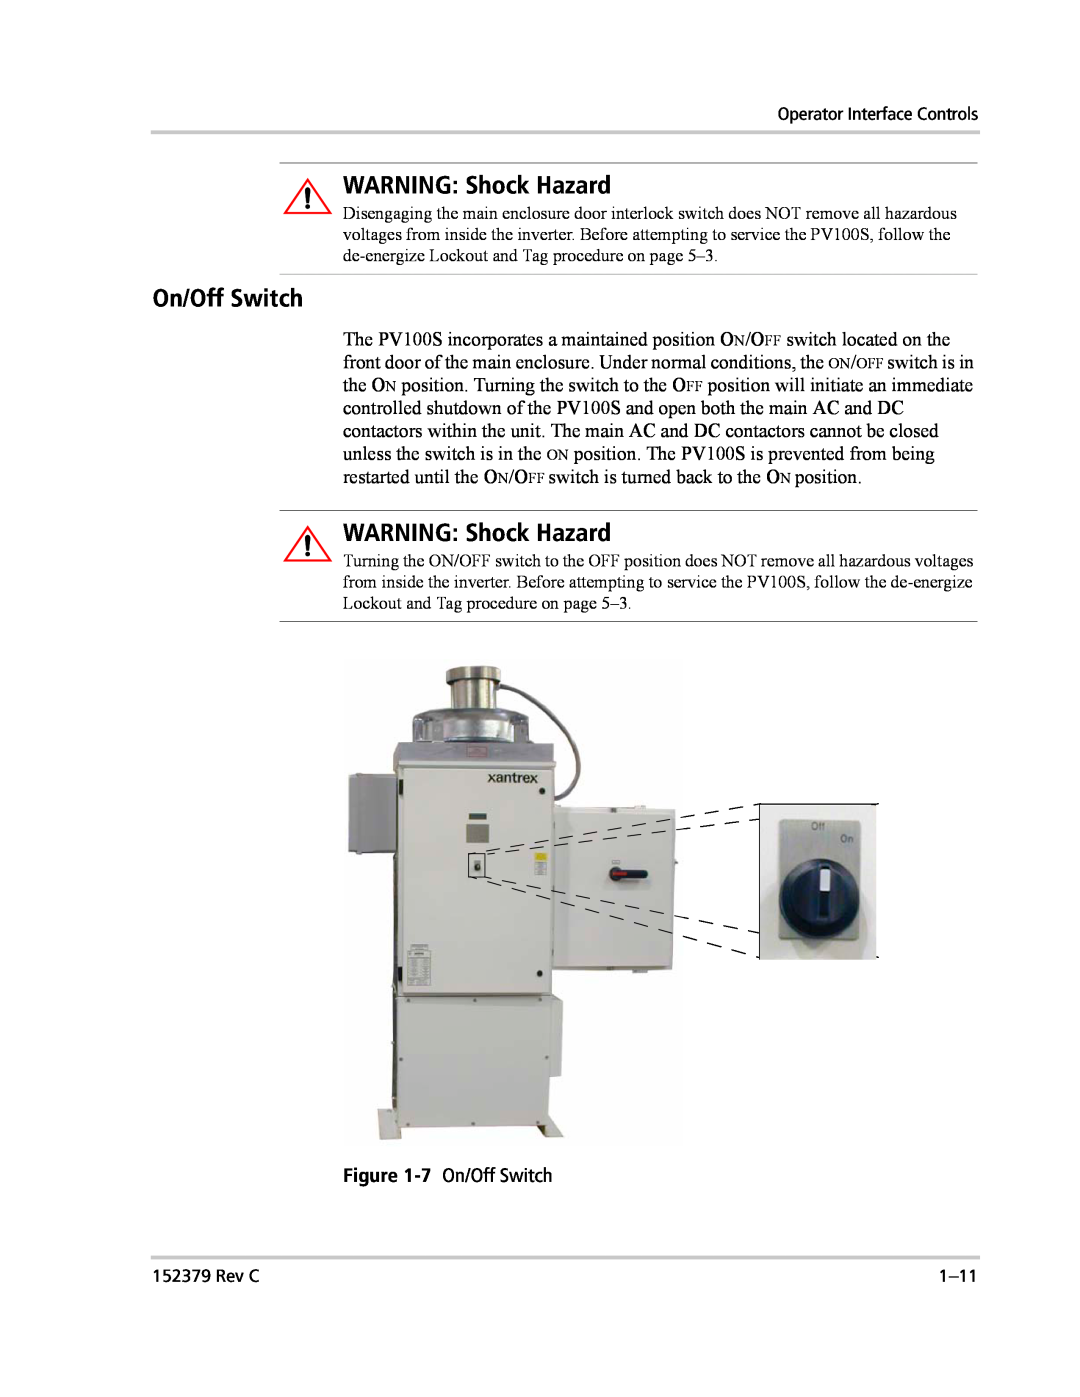 Xantrex Technology PV100S-208 manual 7 On/Off Switch, WARNING Shock Hazard 